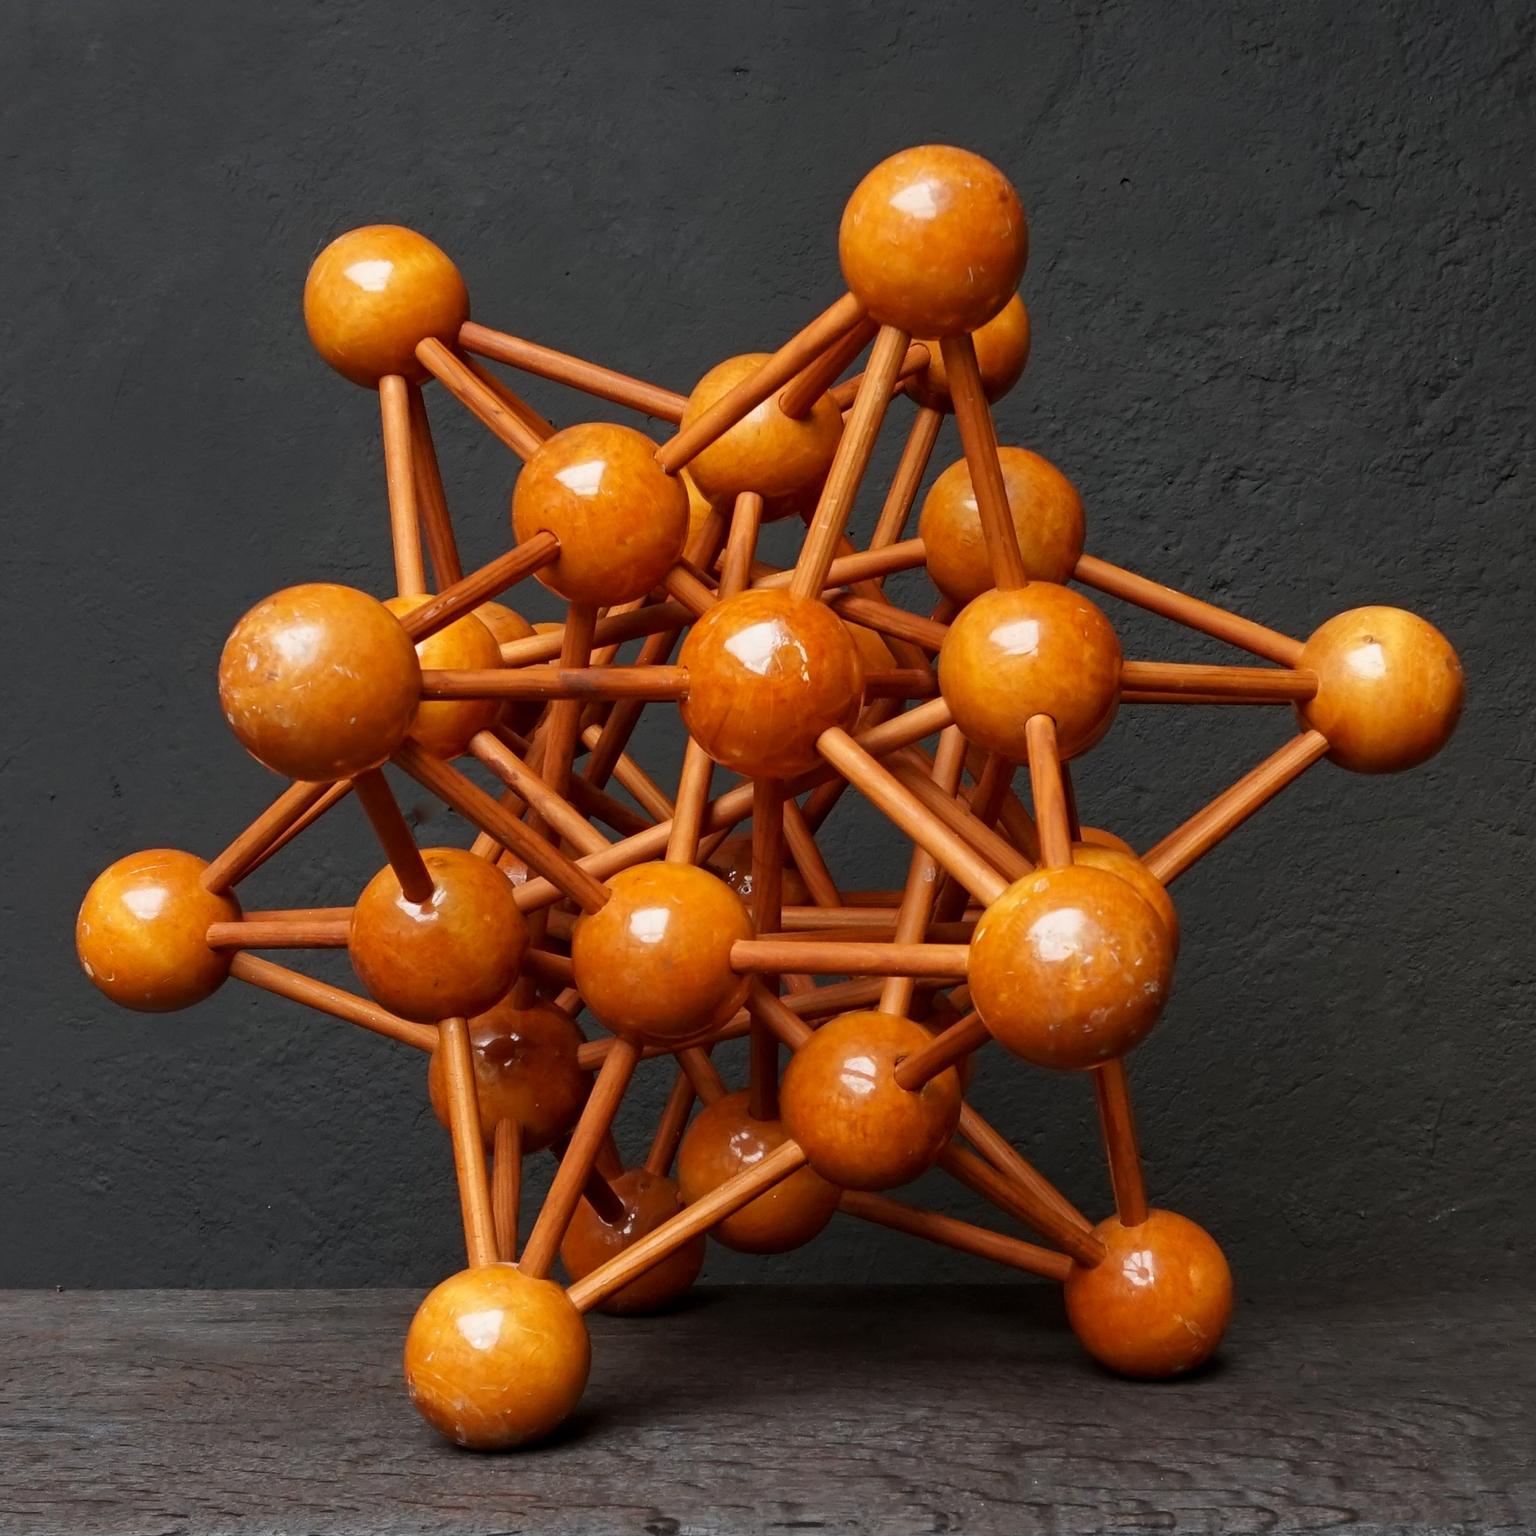 European Mid-Century Modern 1950s Dutch Wooden Scientific Molecule Atomic Sculpture Model For Sale